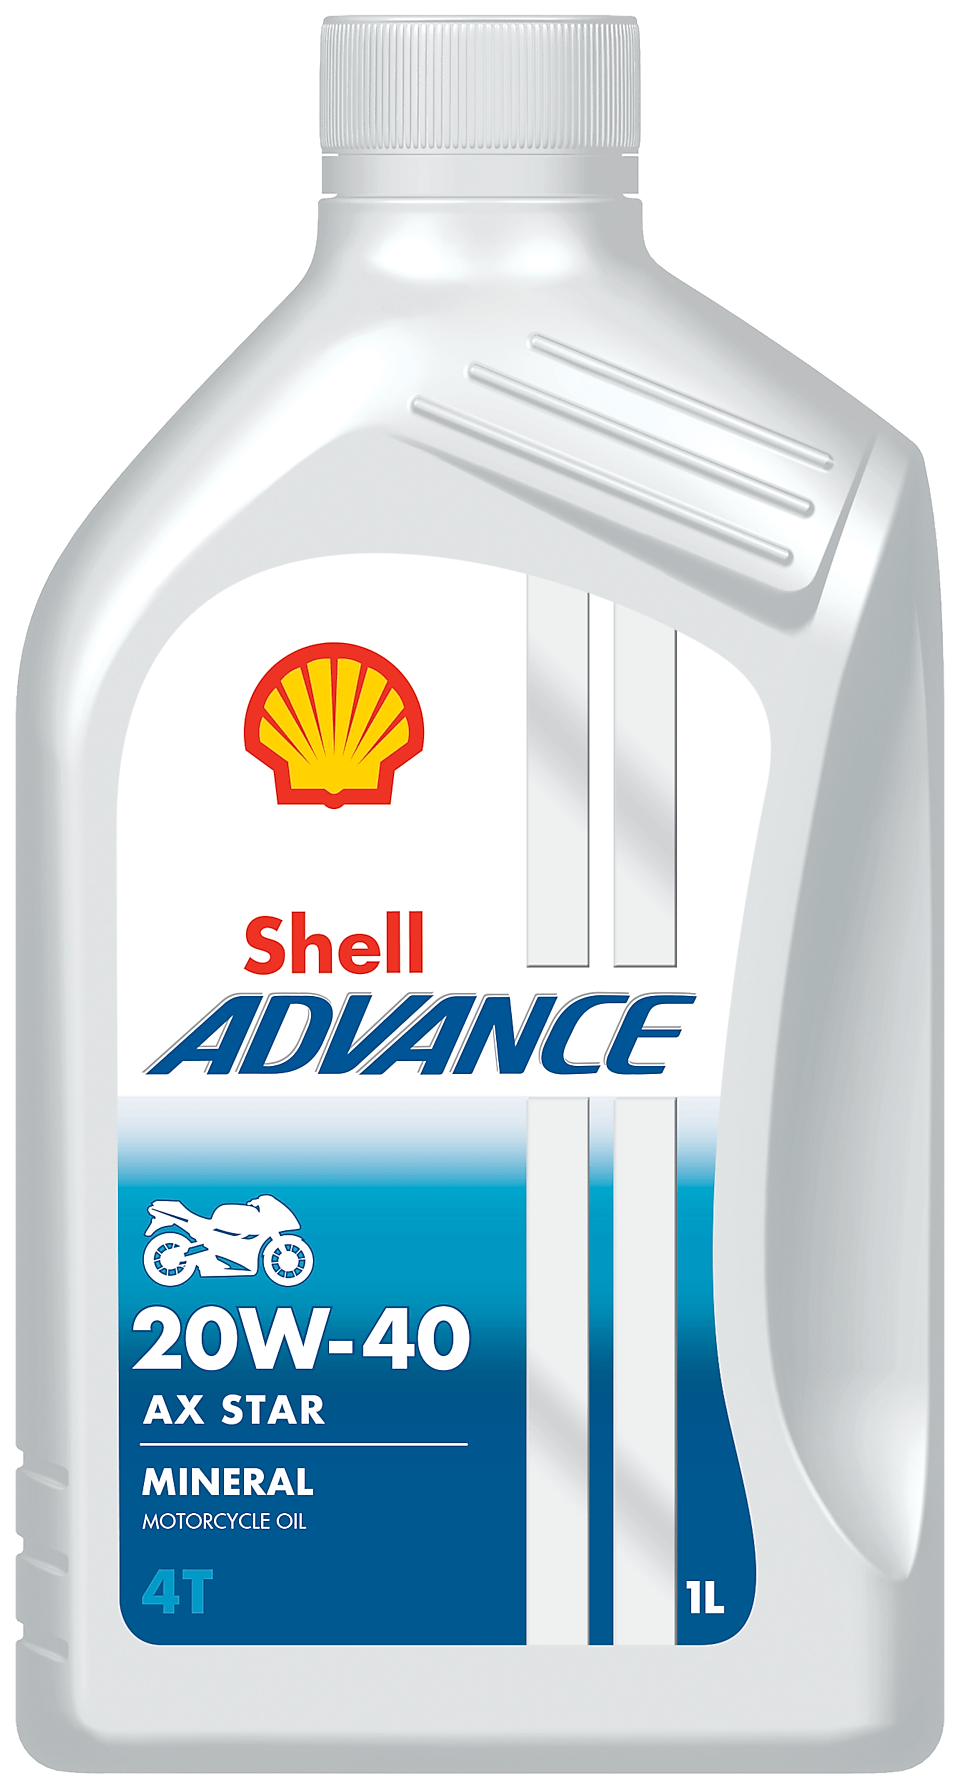 Shell Advance AX Star packshot